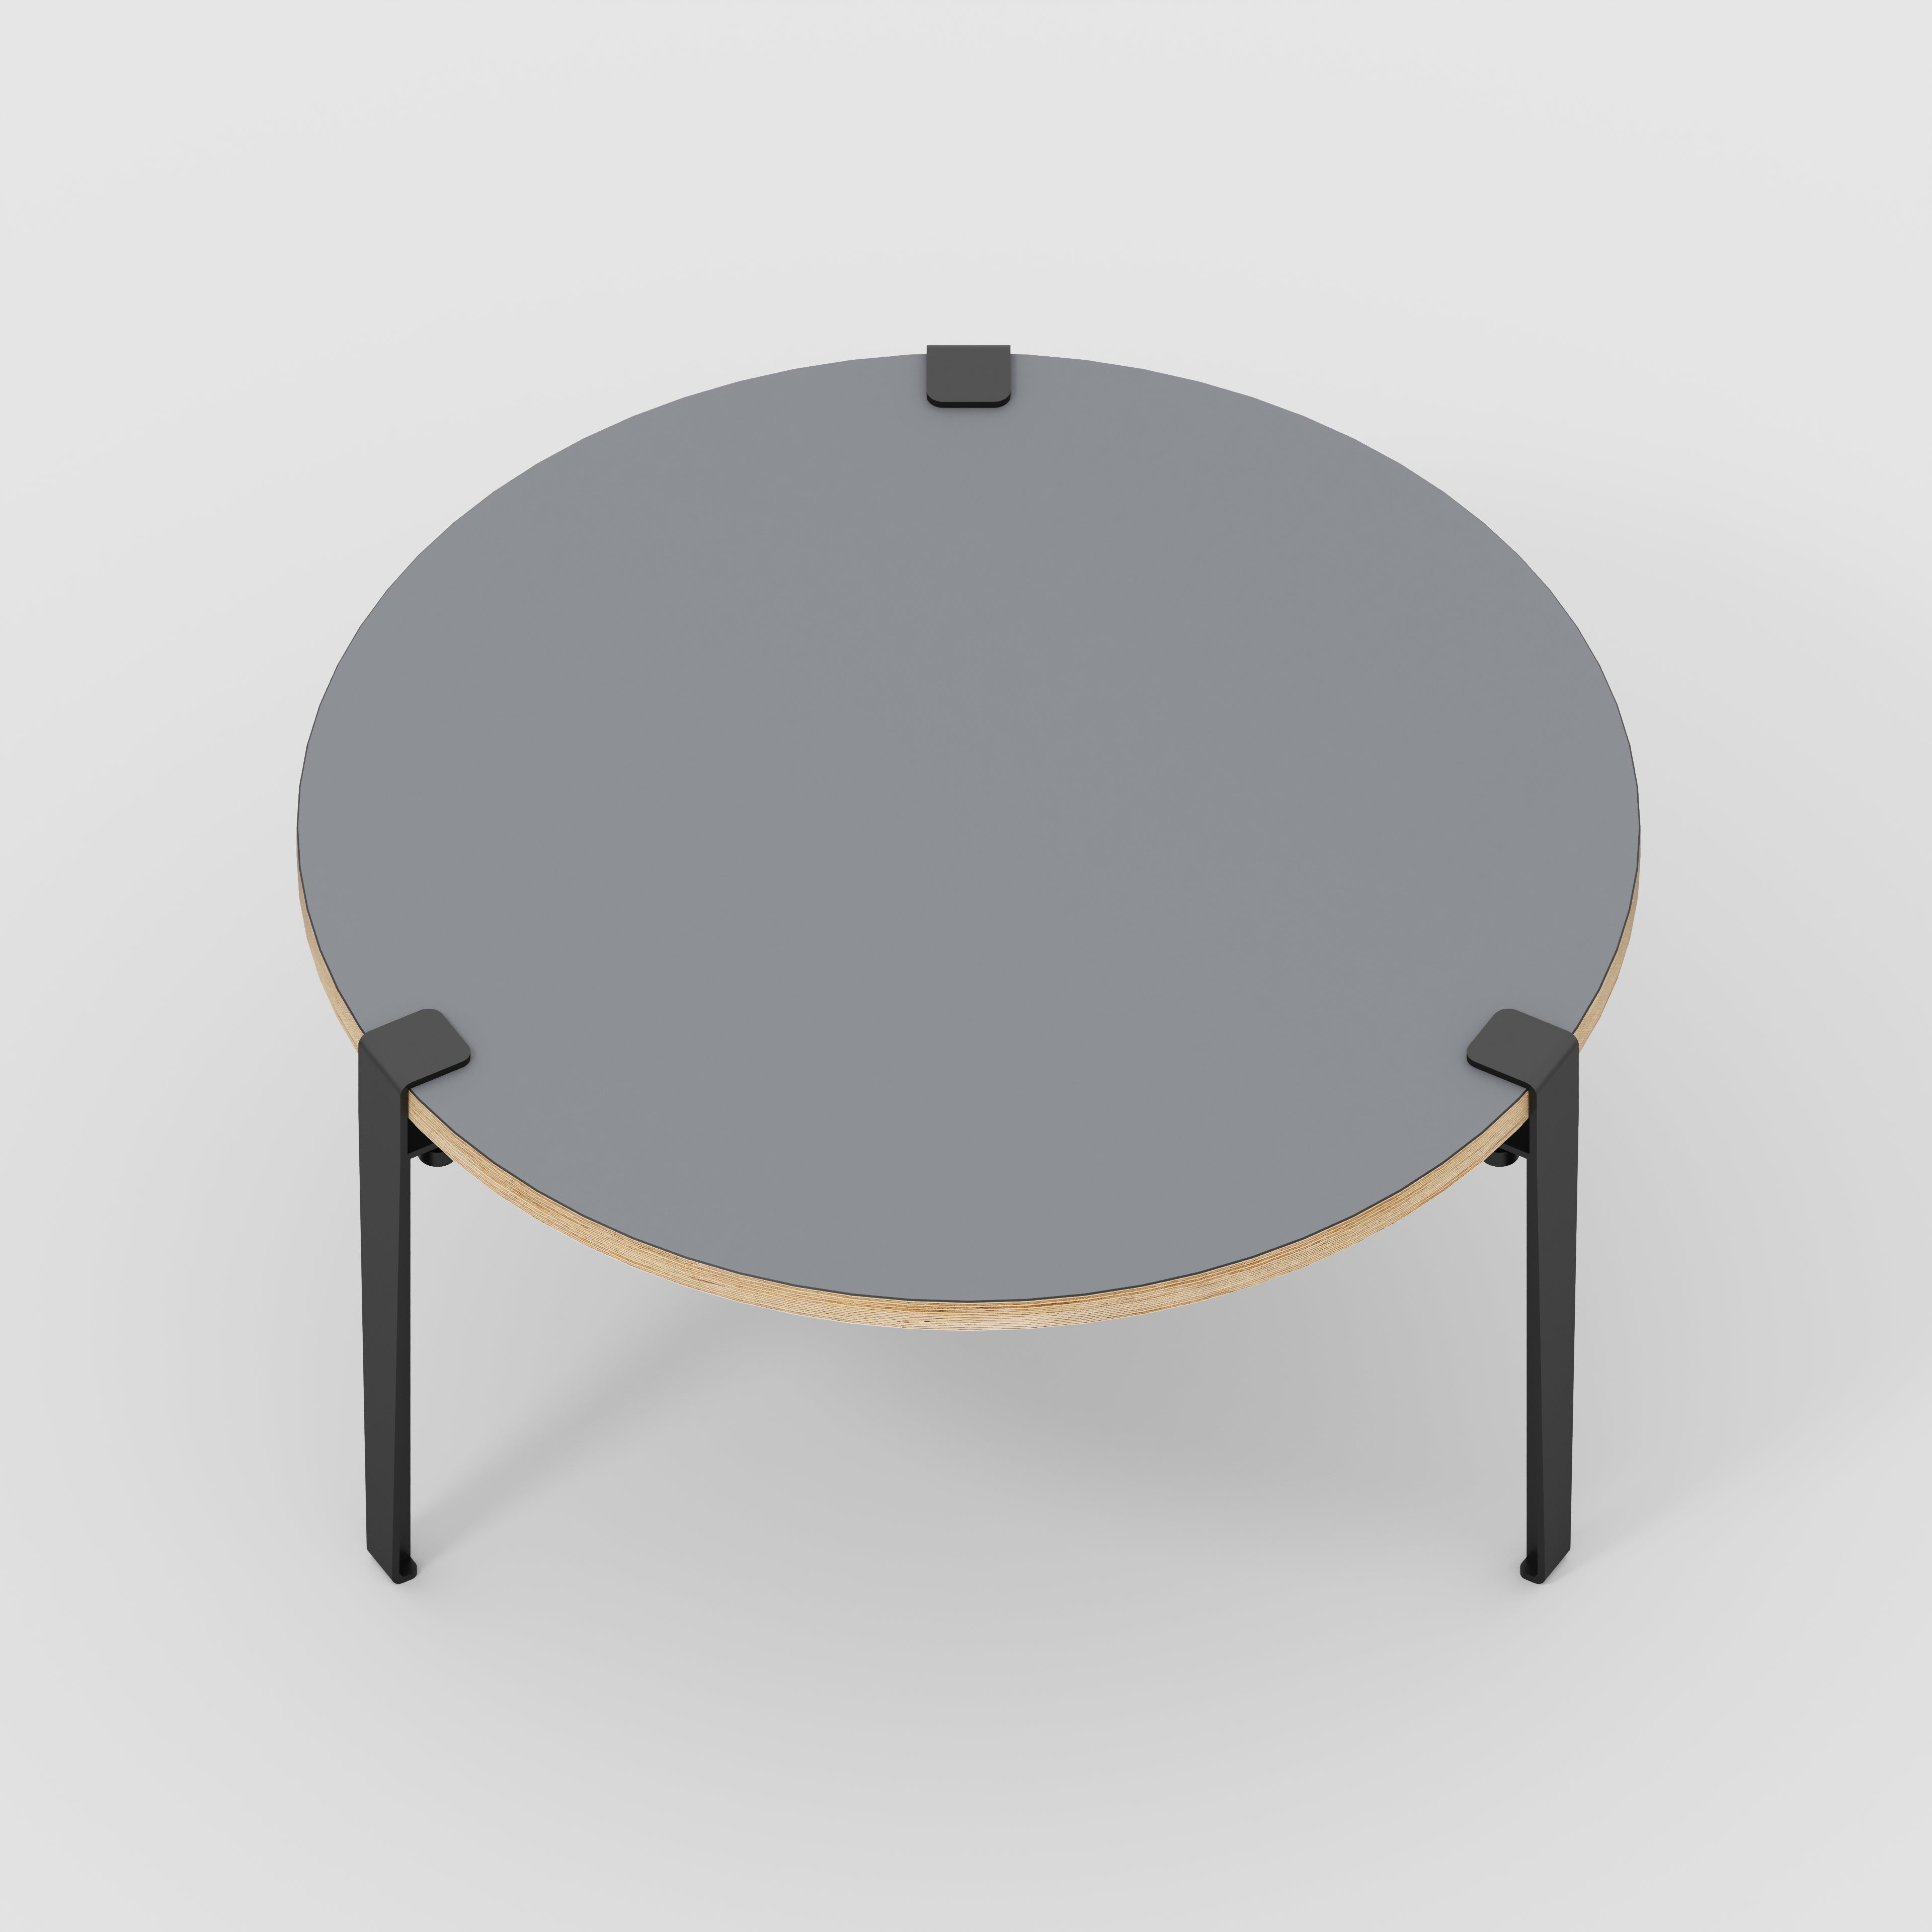 Round Coffee Table with Black Tiptoe Legs - Formica Tornado Grey - 800(dia) x 430(h)